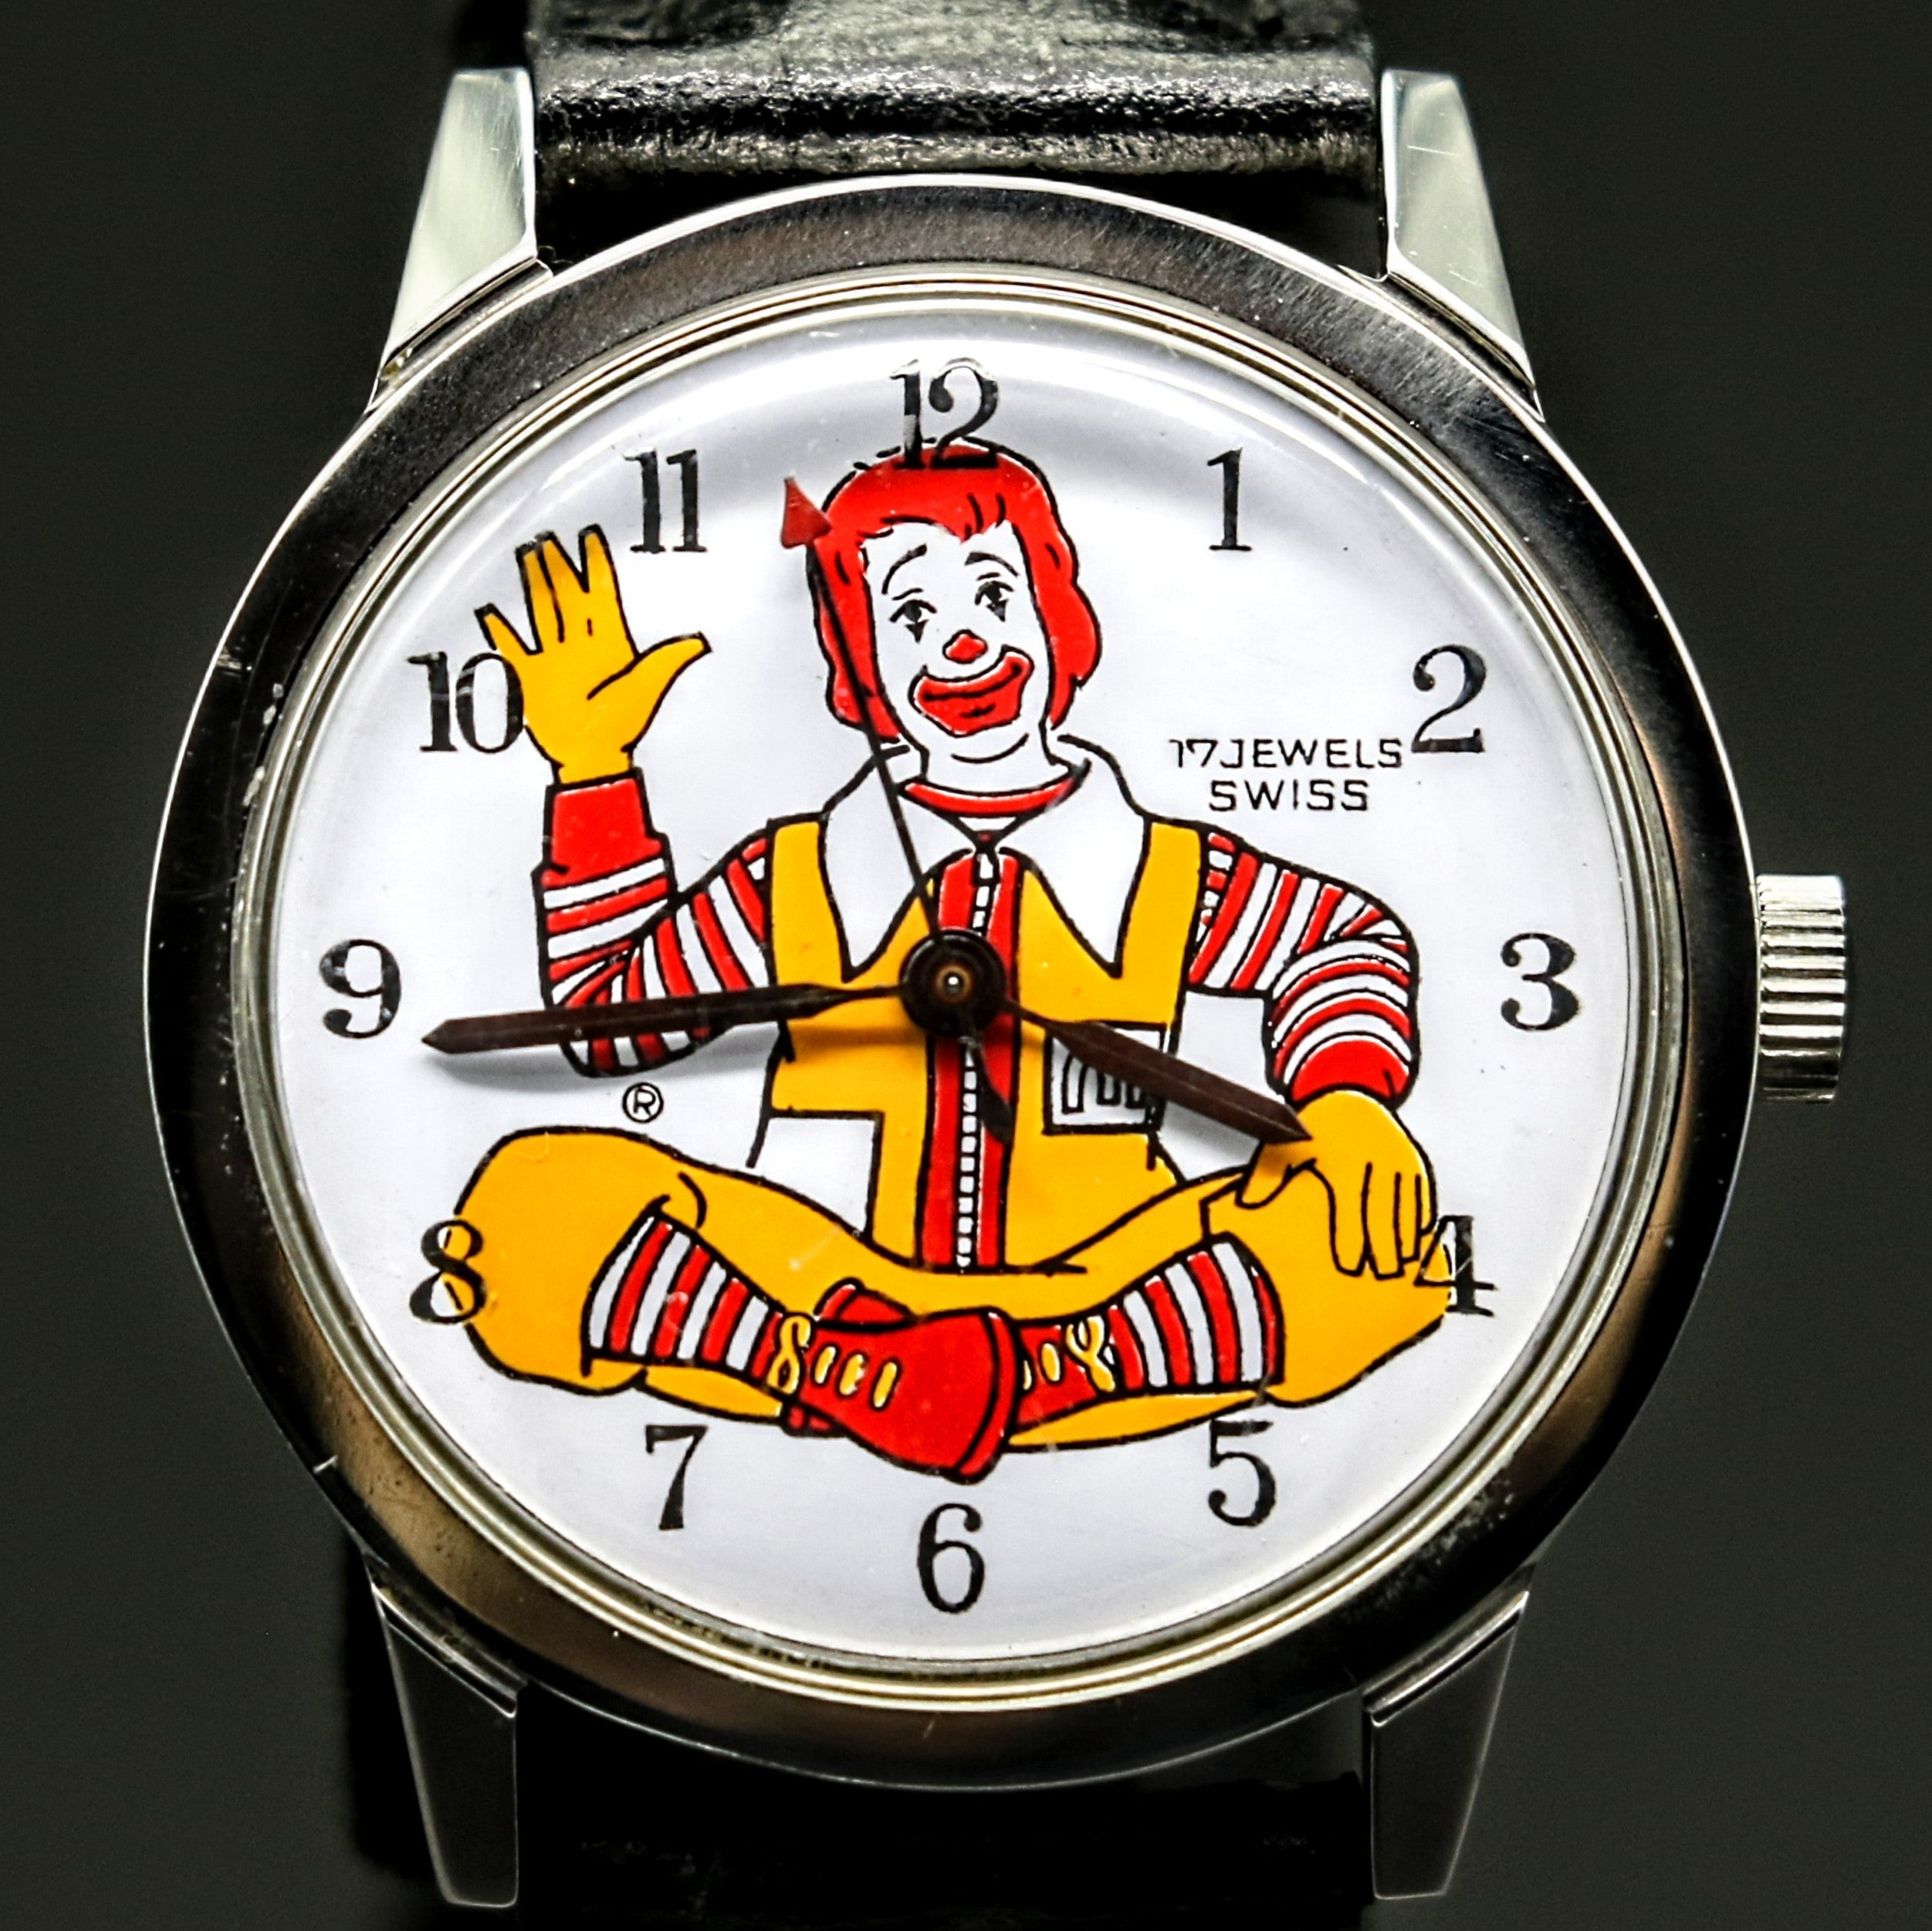 Vintage Le Jour Time Ronald McDonald Character Wristwatch Swiss 17 Jewels Watch